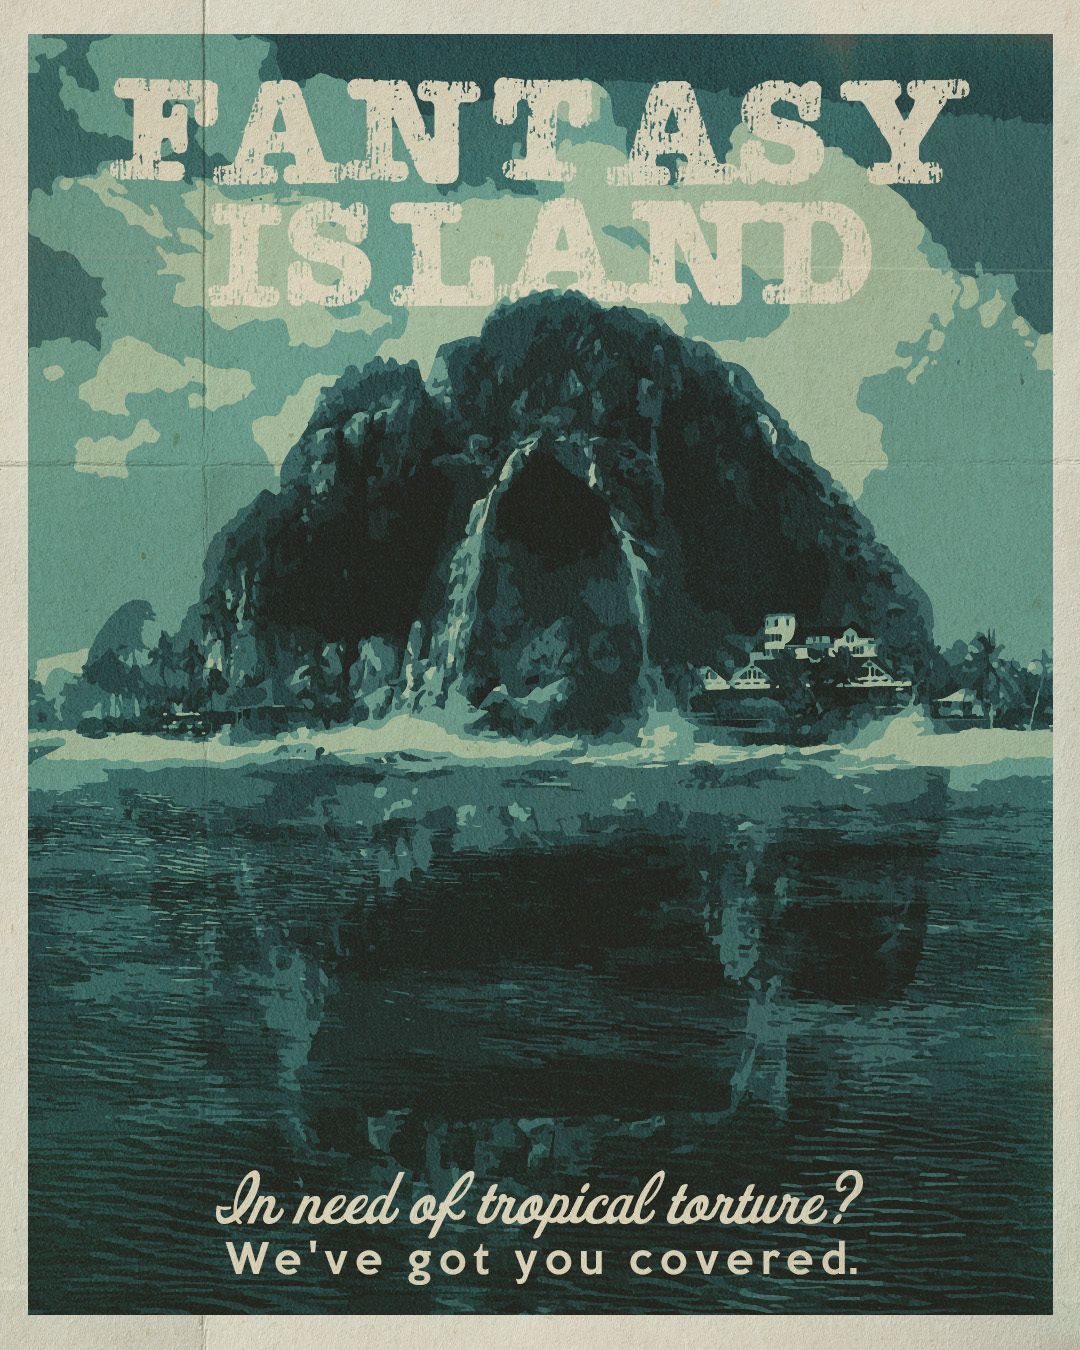 Fantasy island